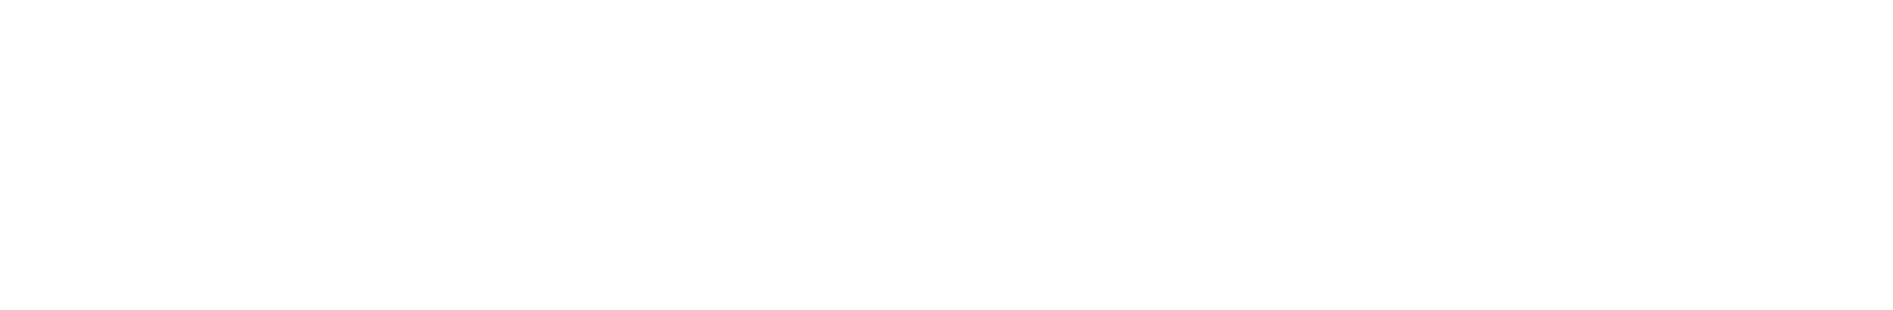 Novartis Logo groß für dunkle Hintergründe (transparentes PNG)